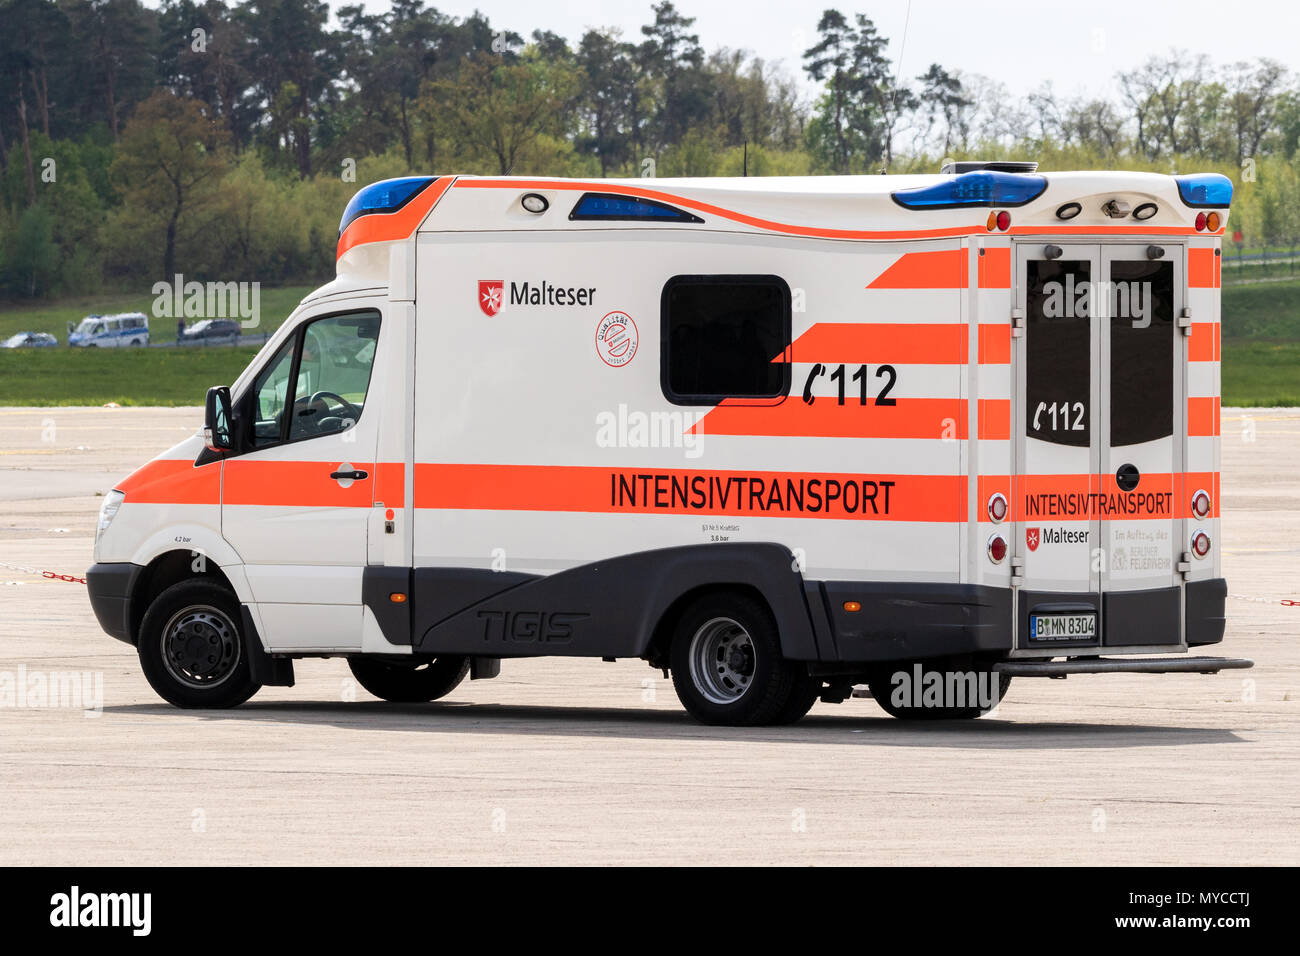 BERLIN, GERMANY - APR 27, 2018: Malteser emergency medical vehicle ambulance on duty at the Berlin-Schonefeld airport. Stock Photo